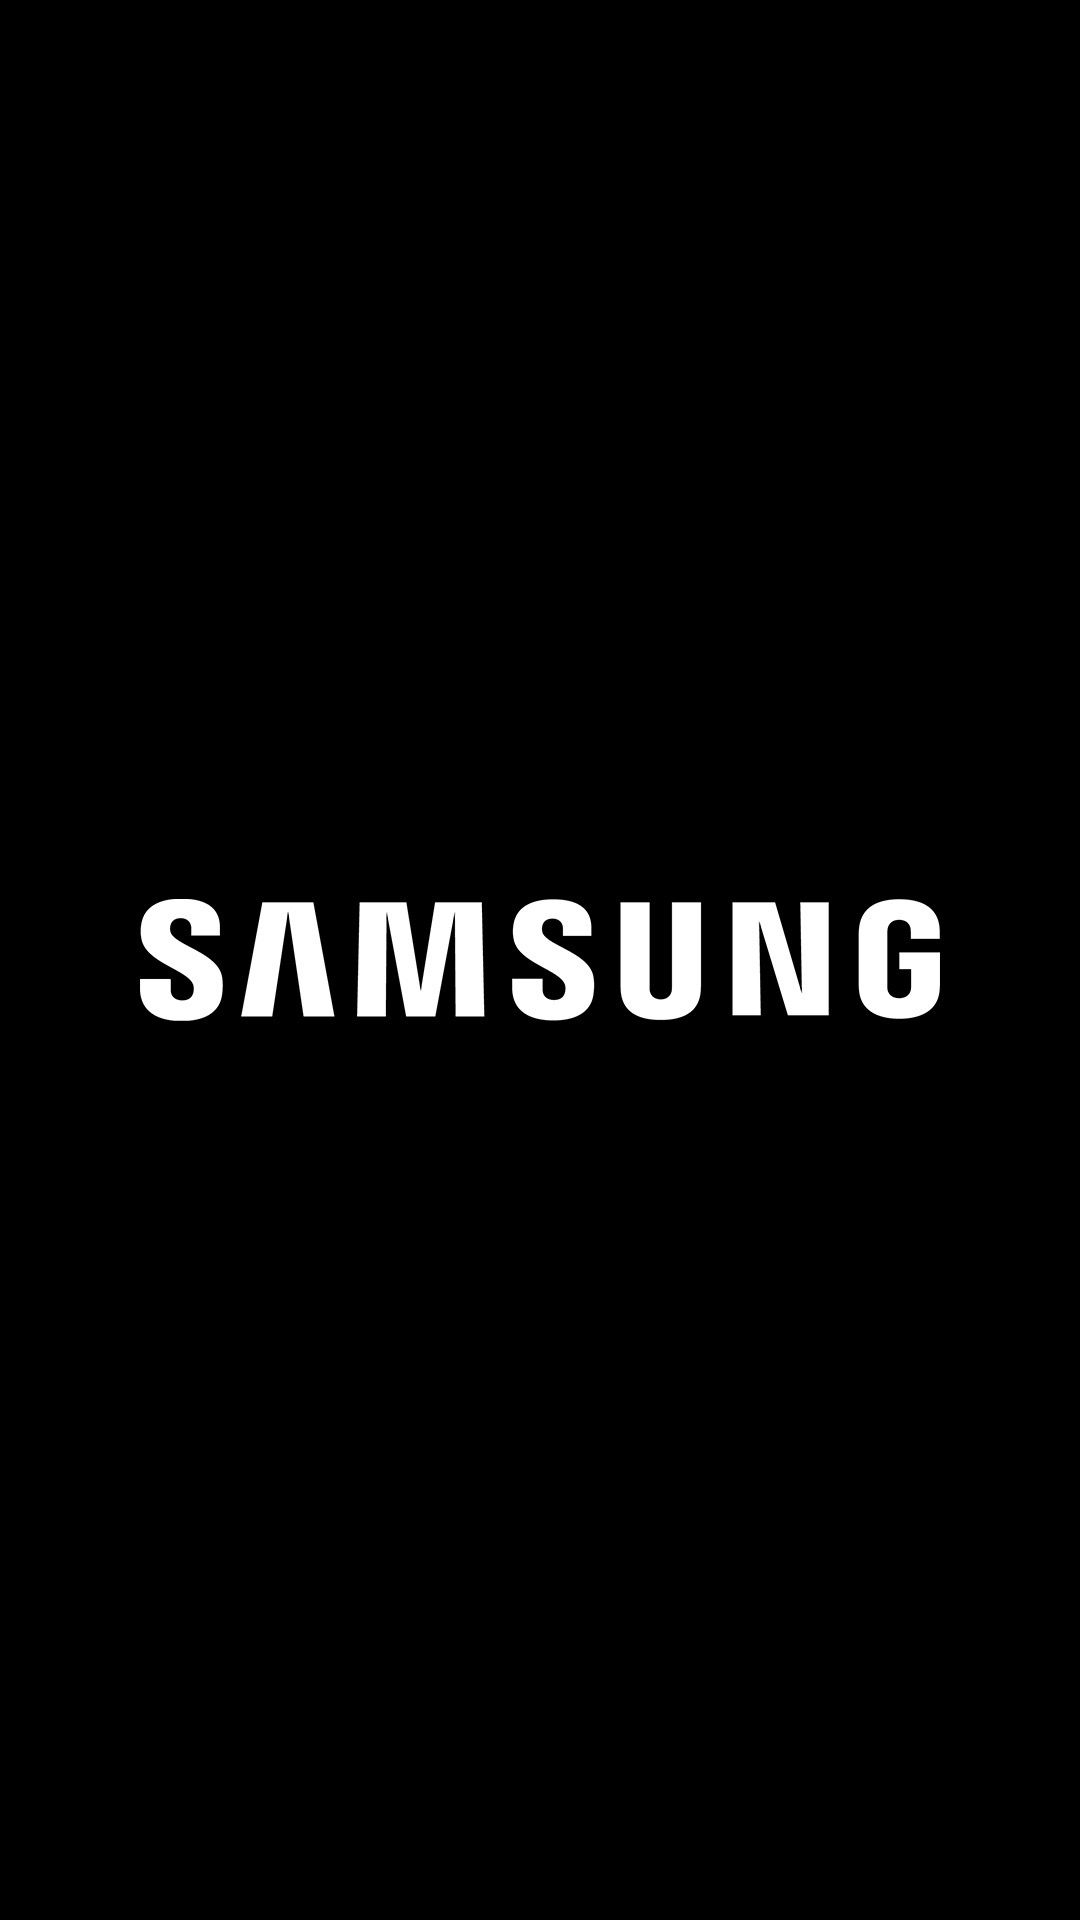 1080x1920 Samsung logo wallpaper | Samsung wallpaper, Samsung logo, Samsung wallpaper android